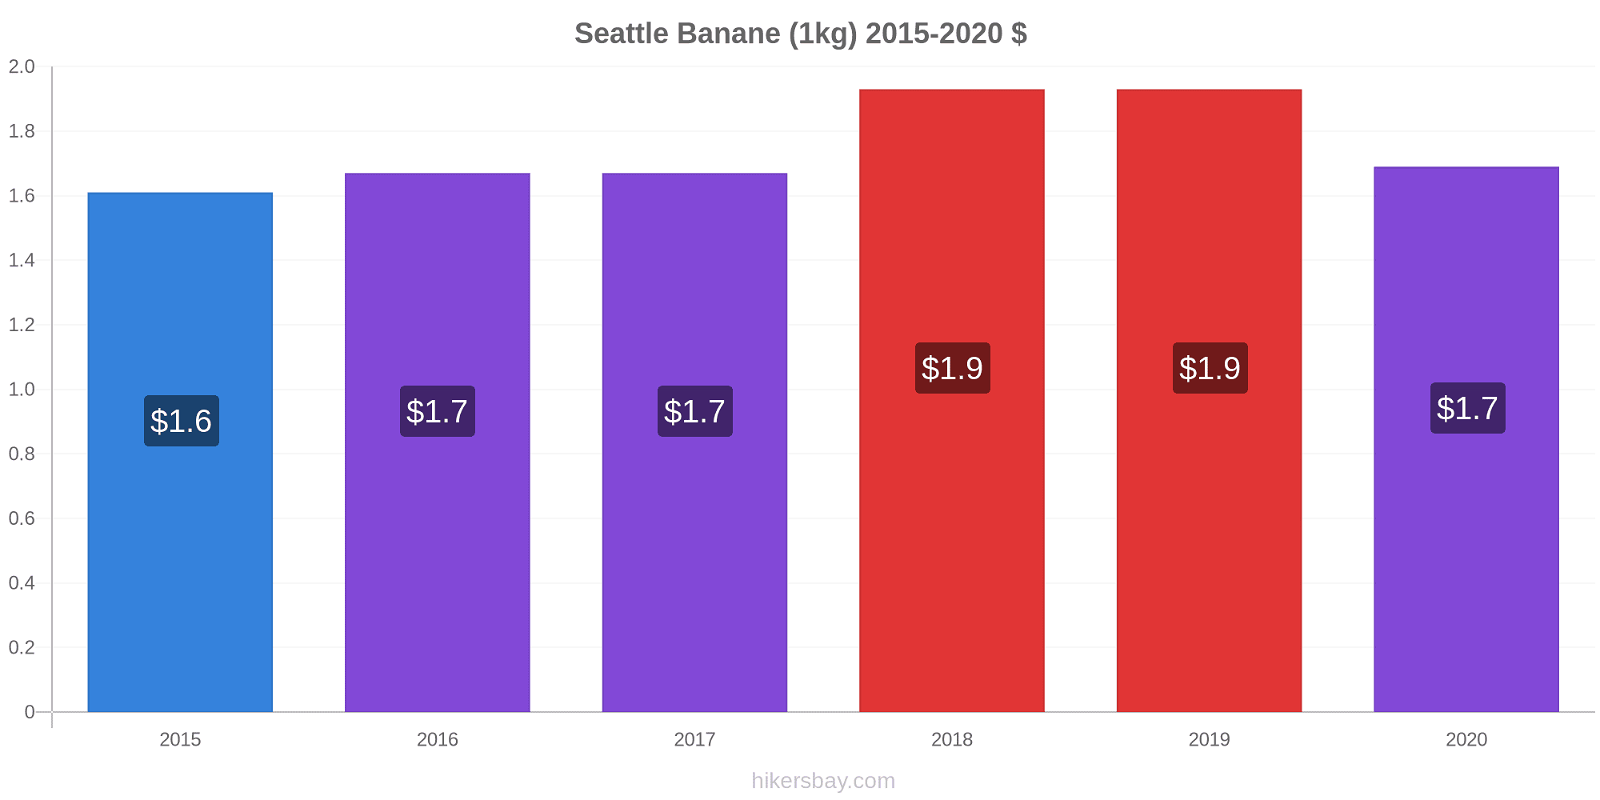 Seattle variazioni di prezzo Banana (1kg) hikersbay.com